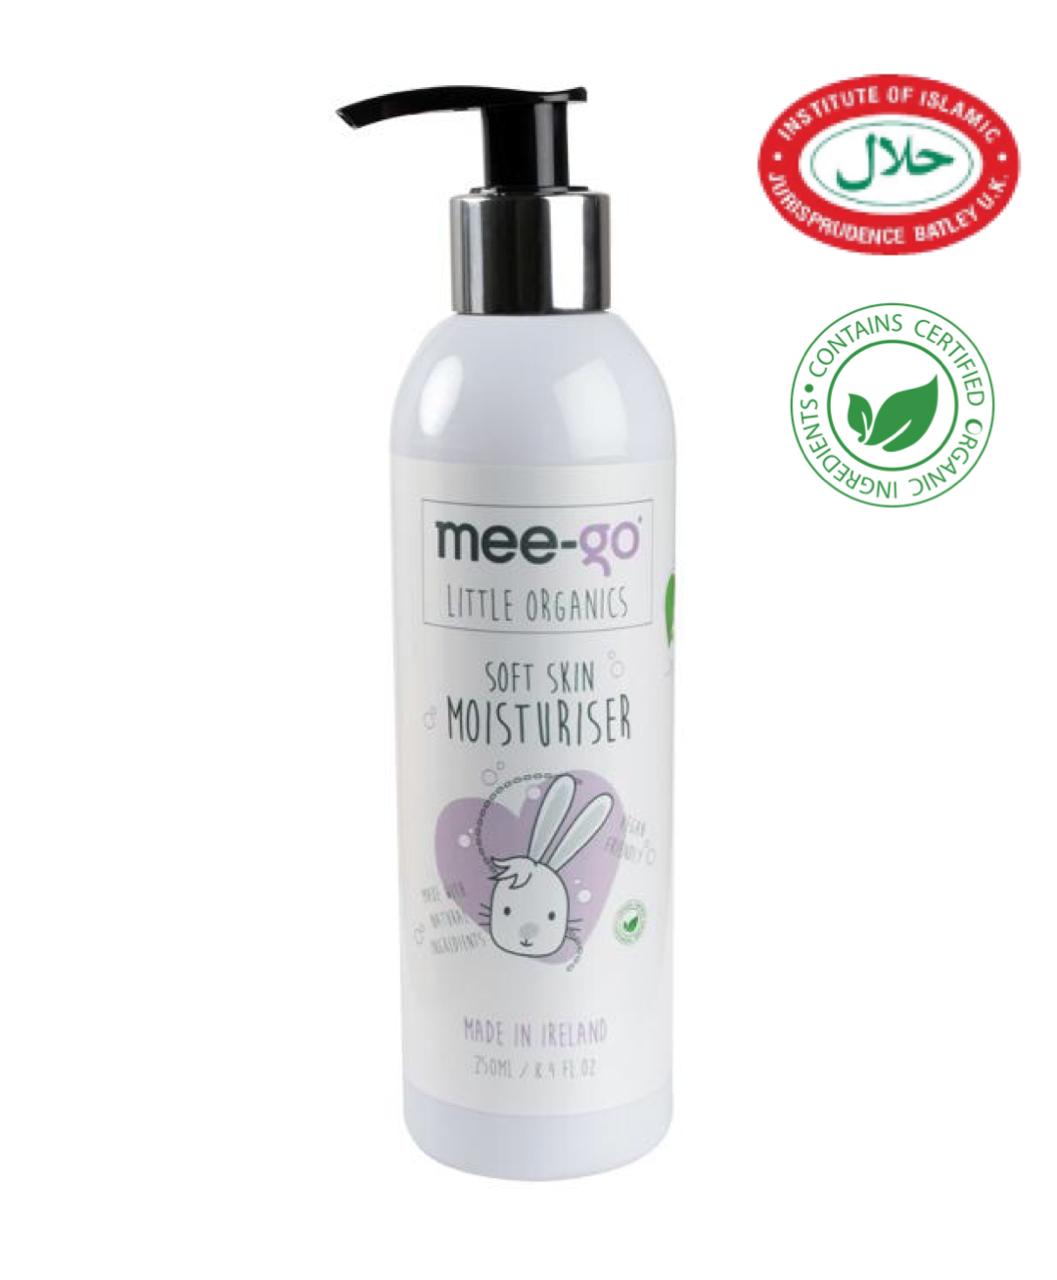 Mee-go Little Organics Halal Hair & Skincare Range